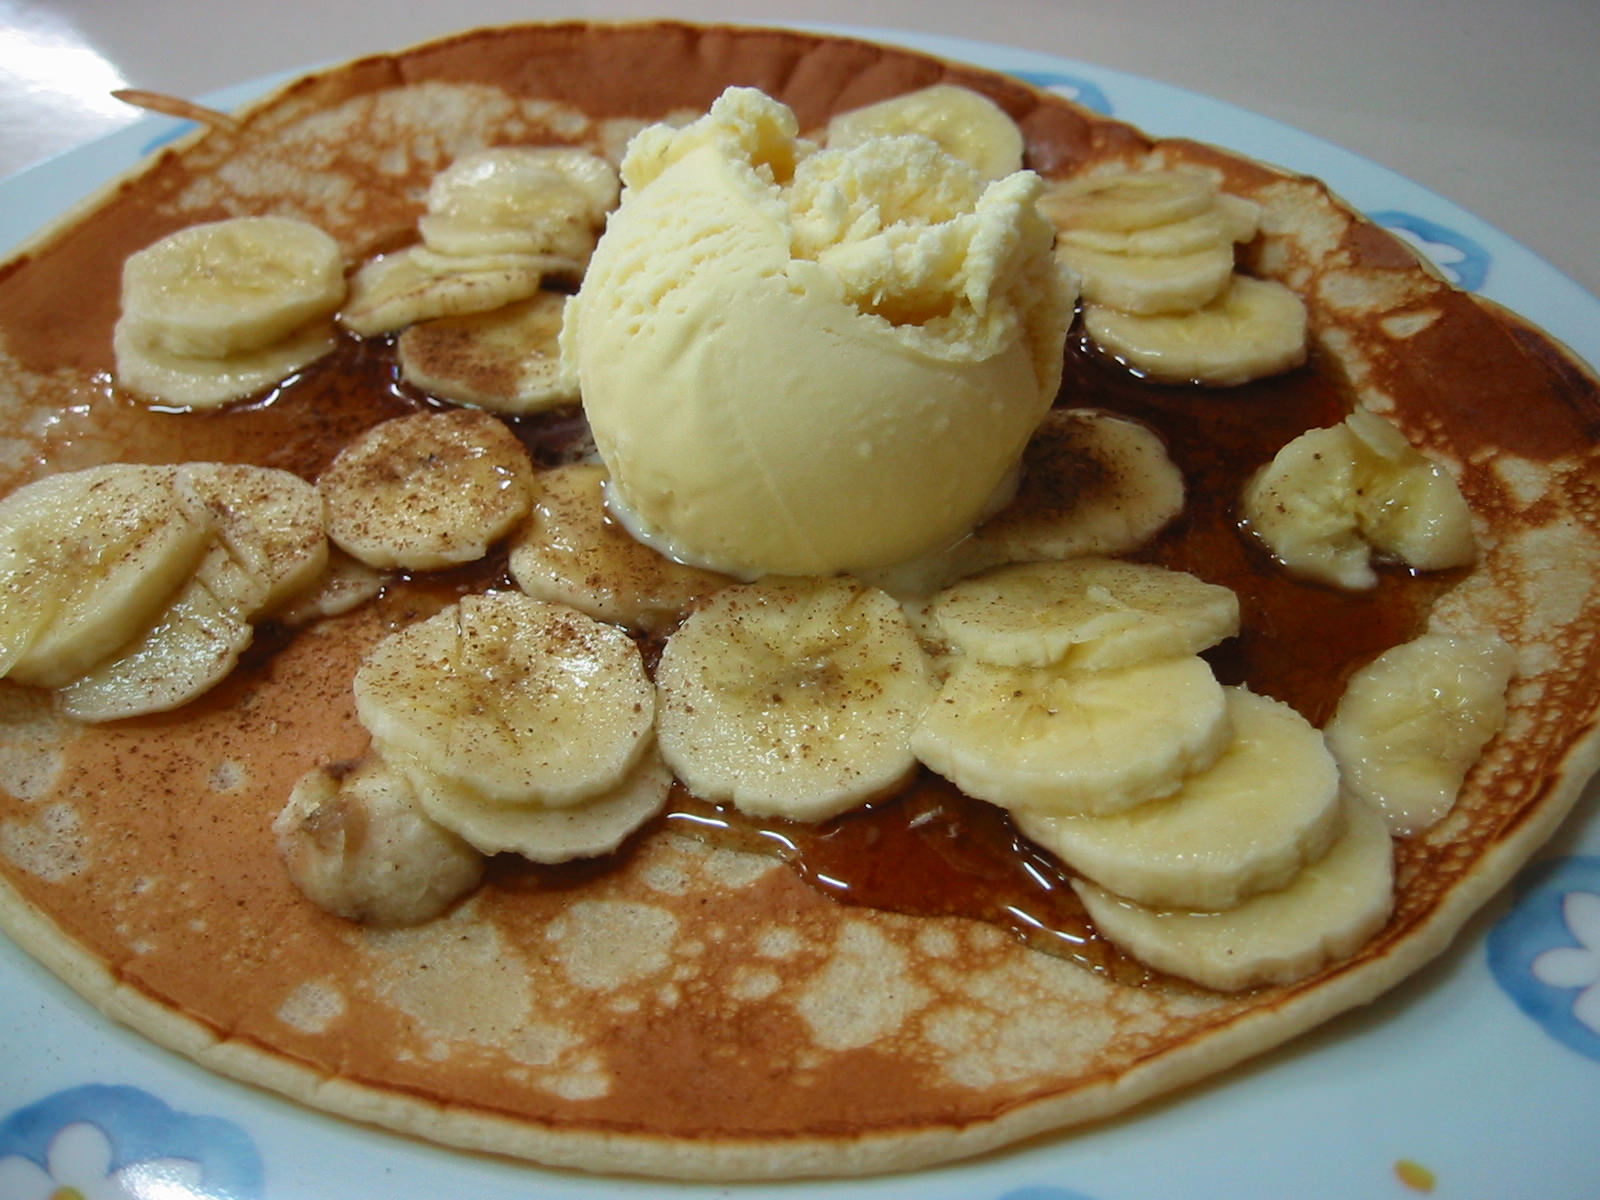 Pancake with banana, maple syrup and ice cream